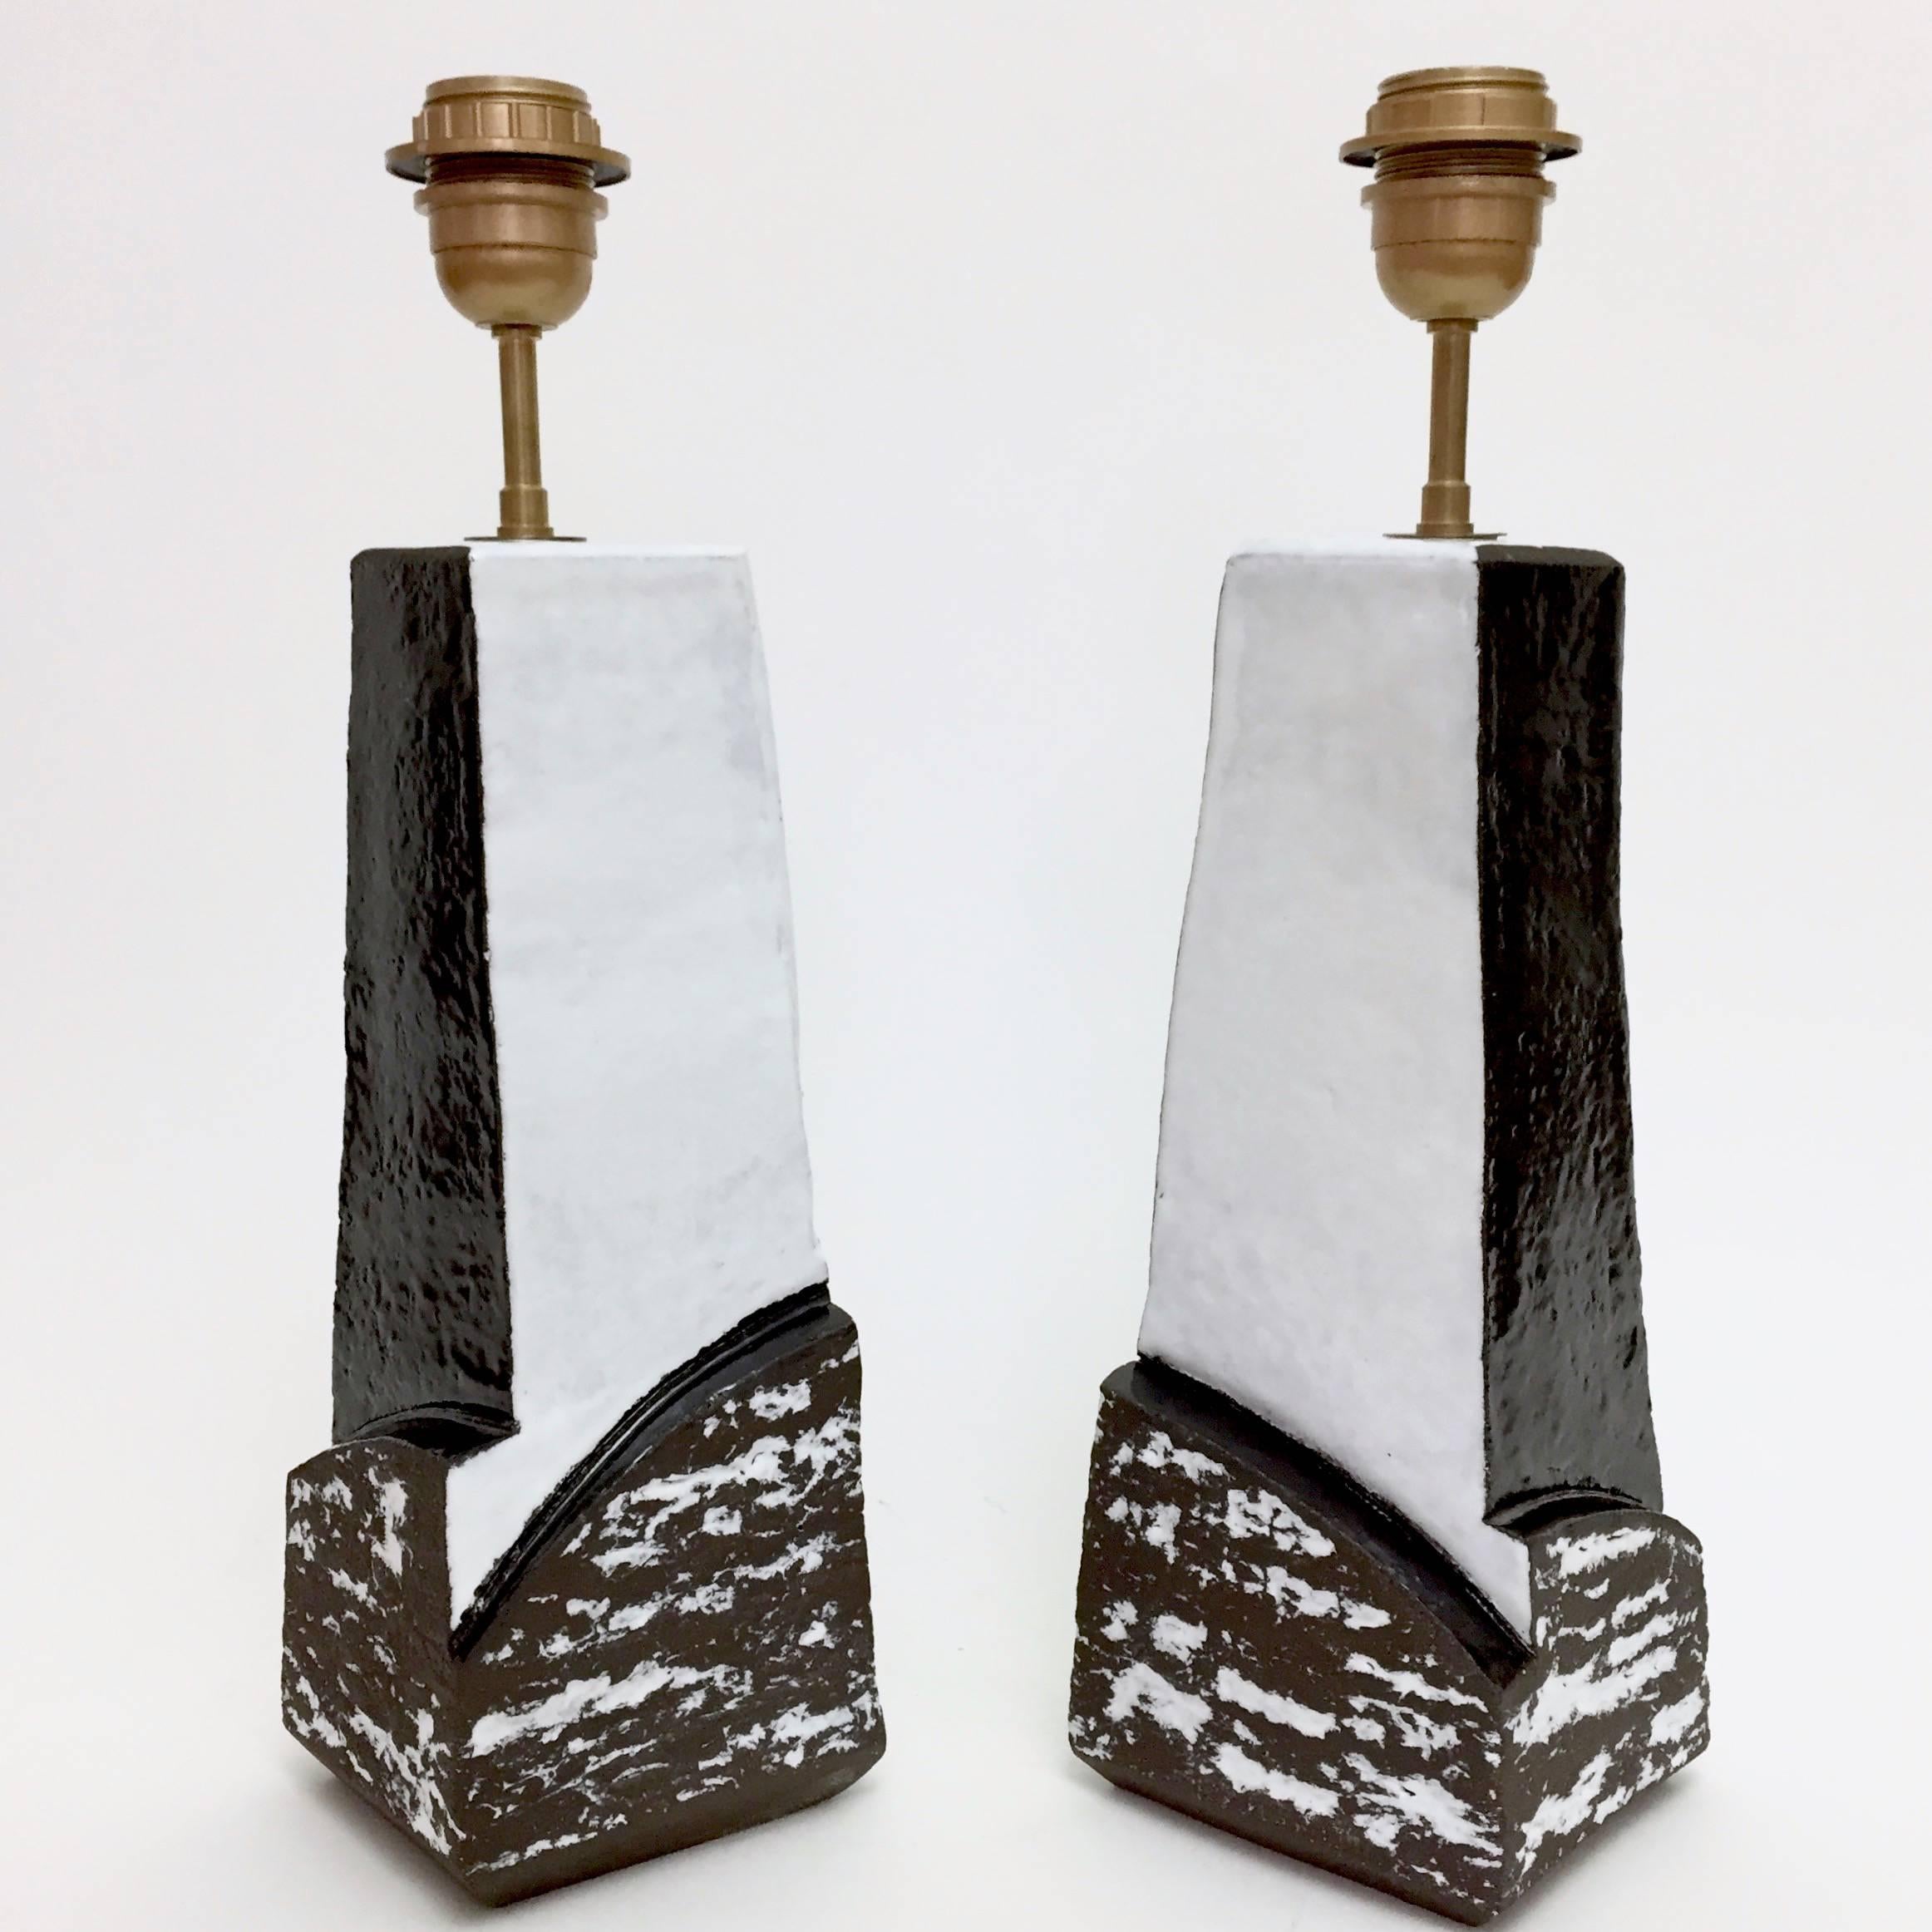 Modern Pair of Ceramic Lamp Bases Glazed in Black and White